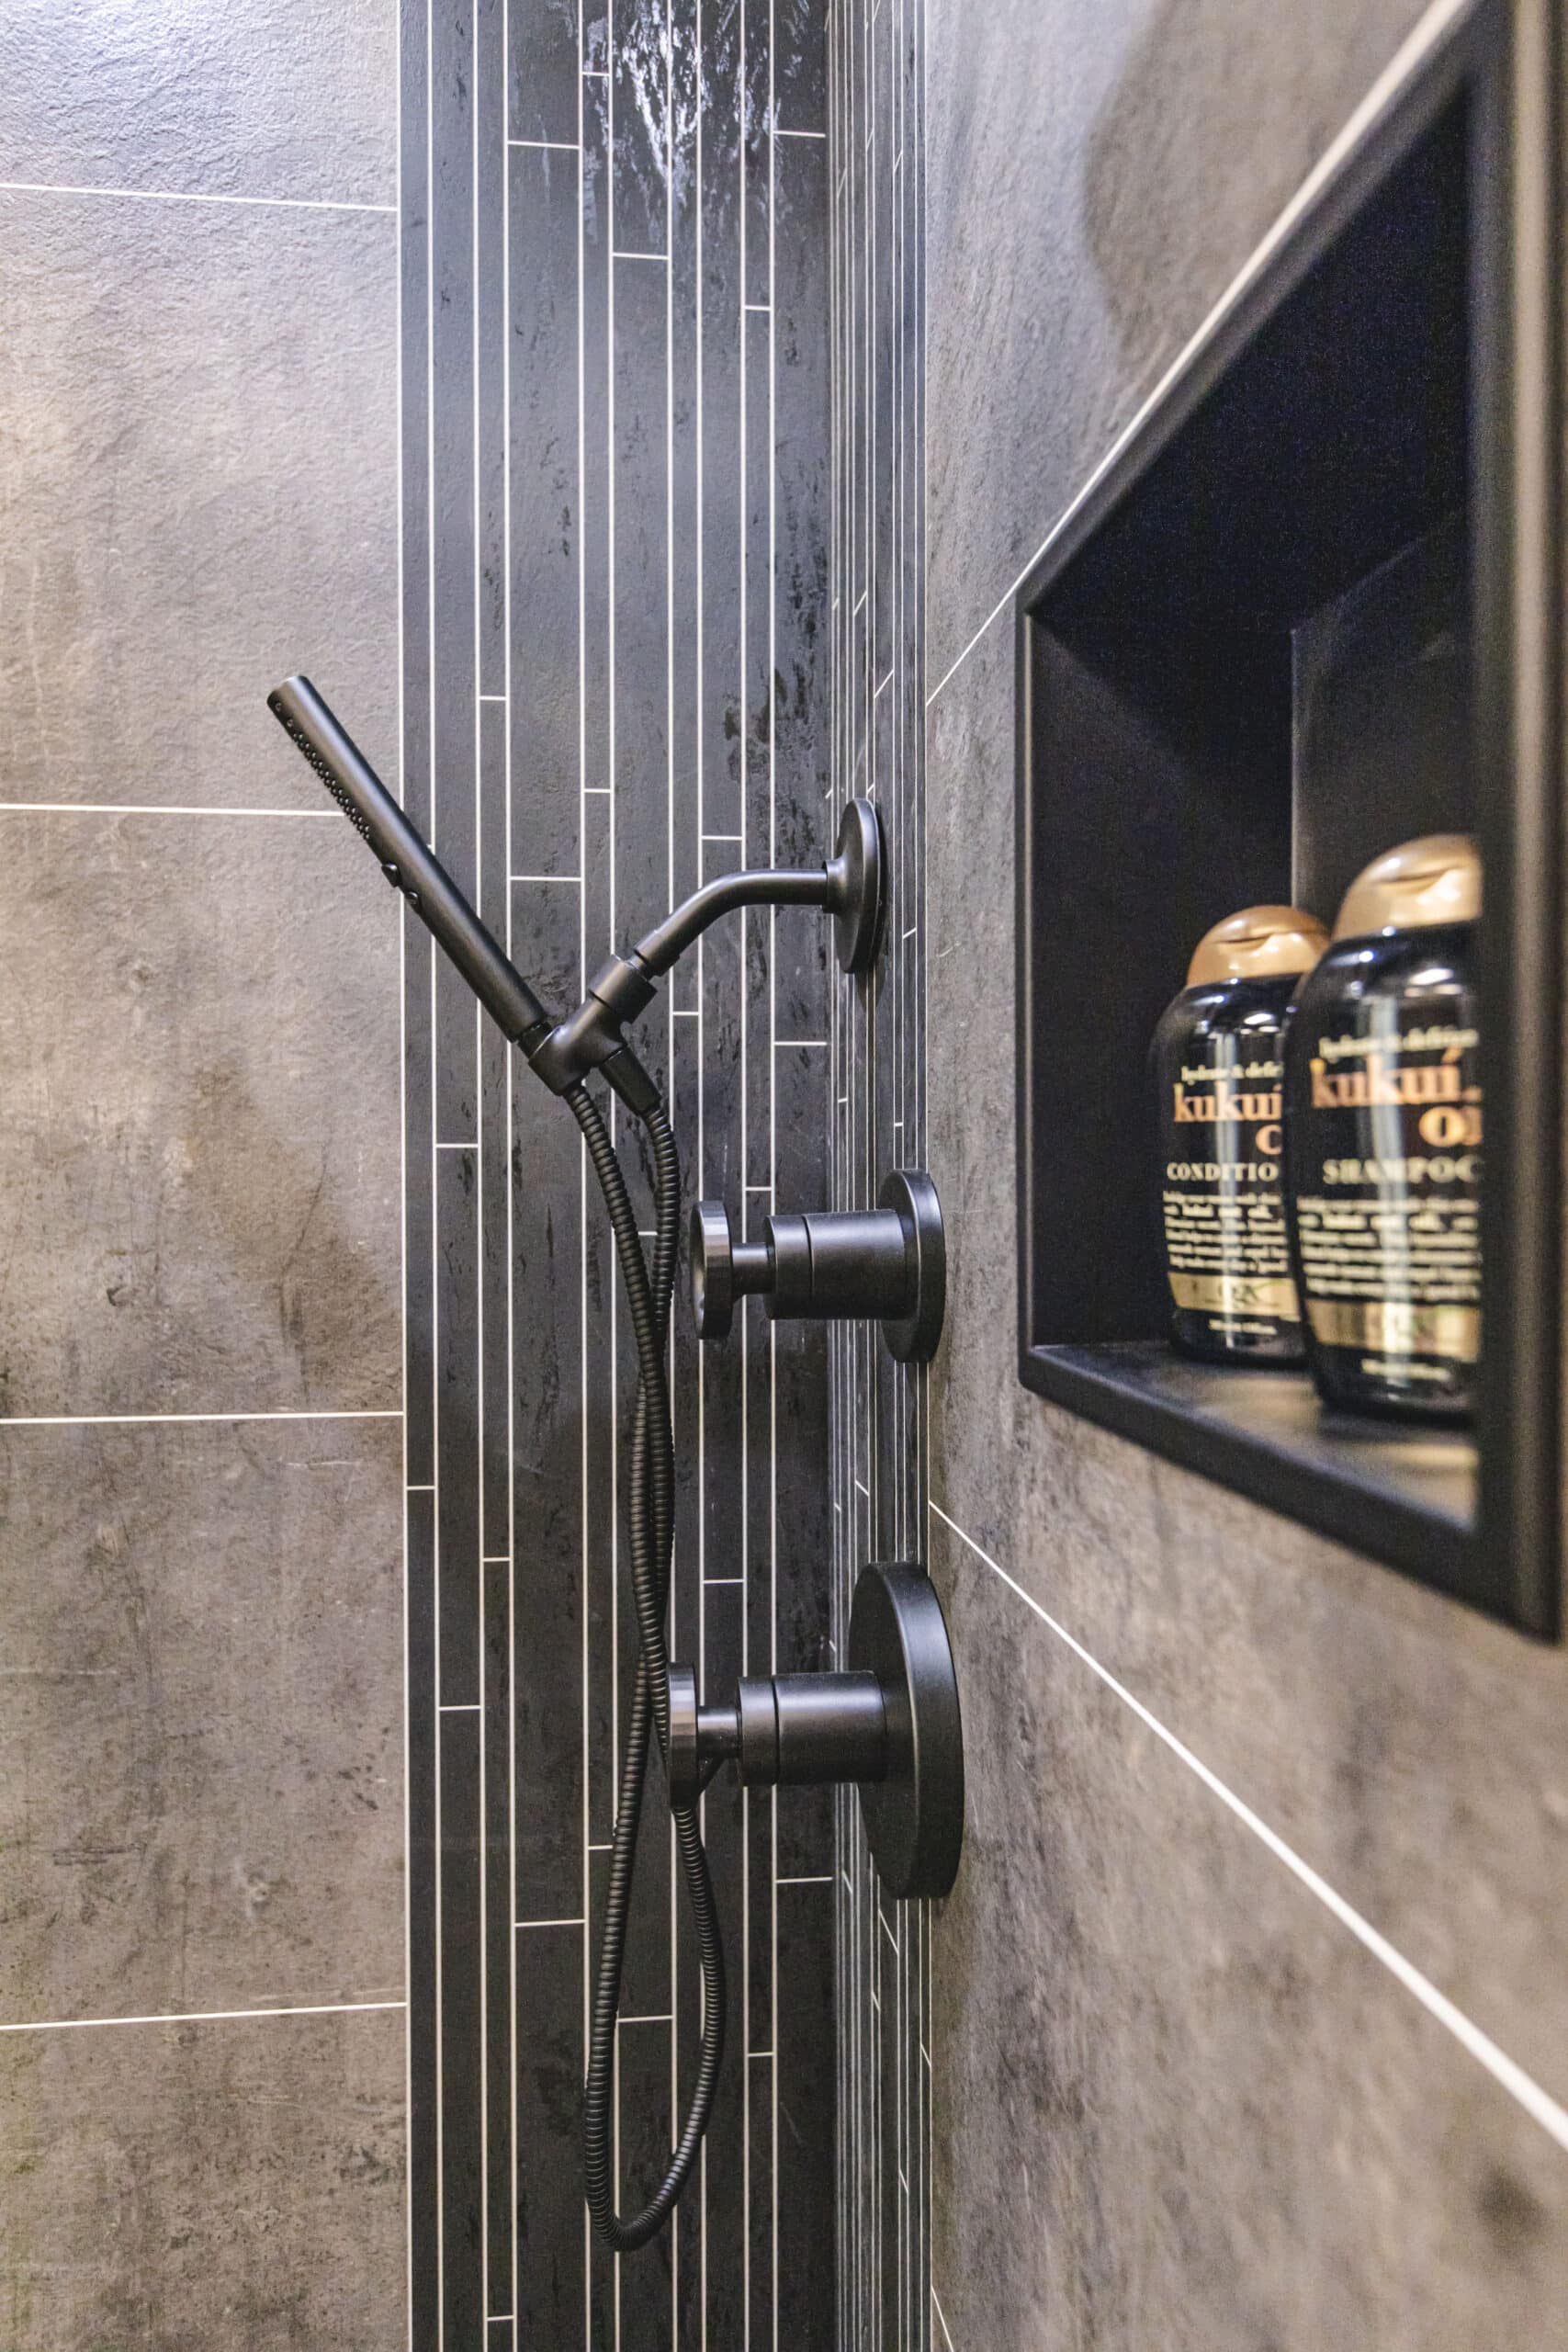 A monochrome tiled shower